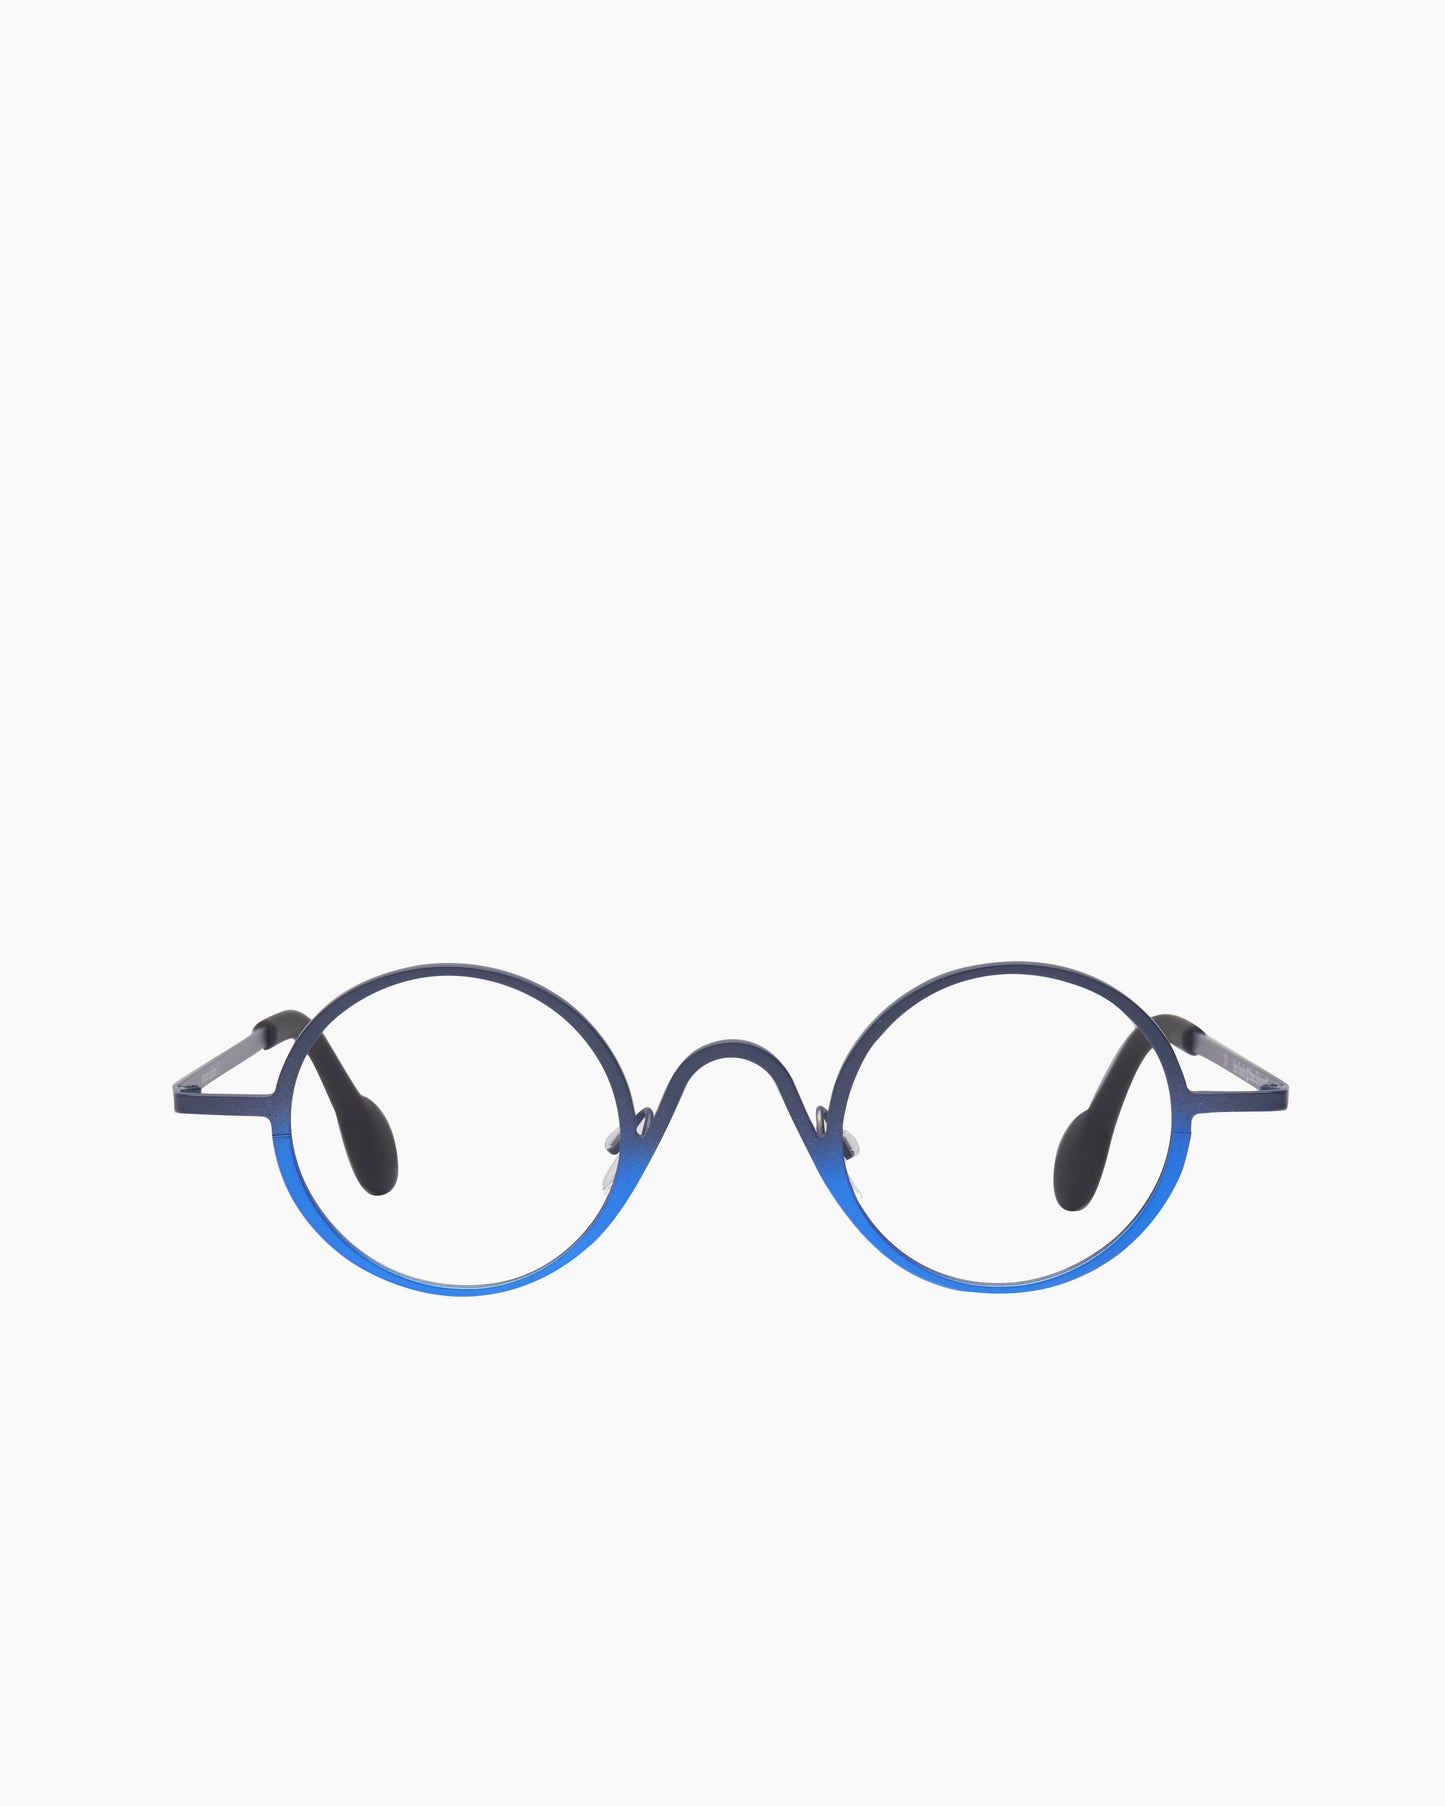 Theo-Stanley-374 | glasses bar